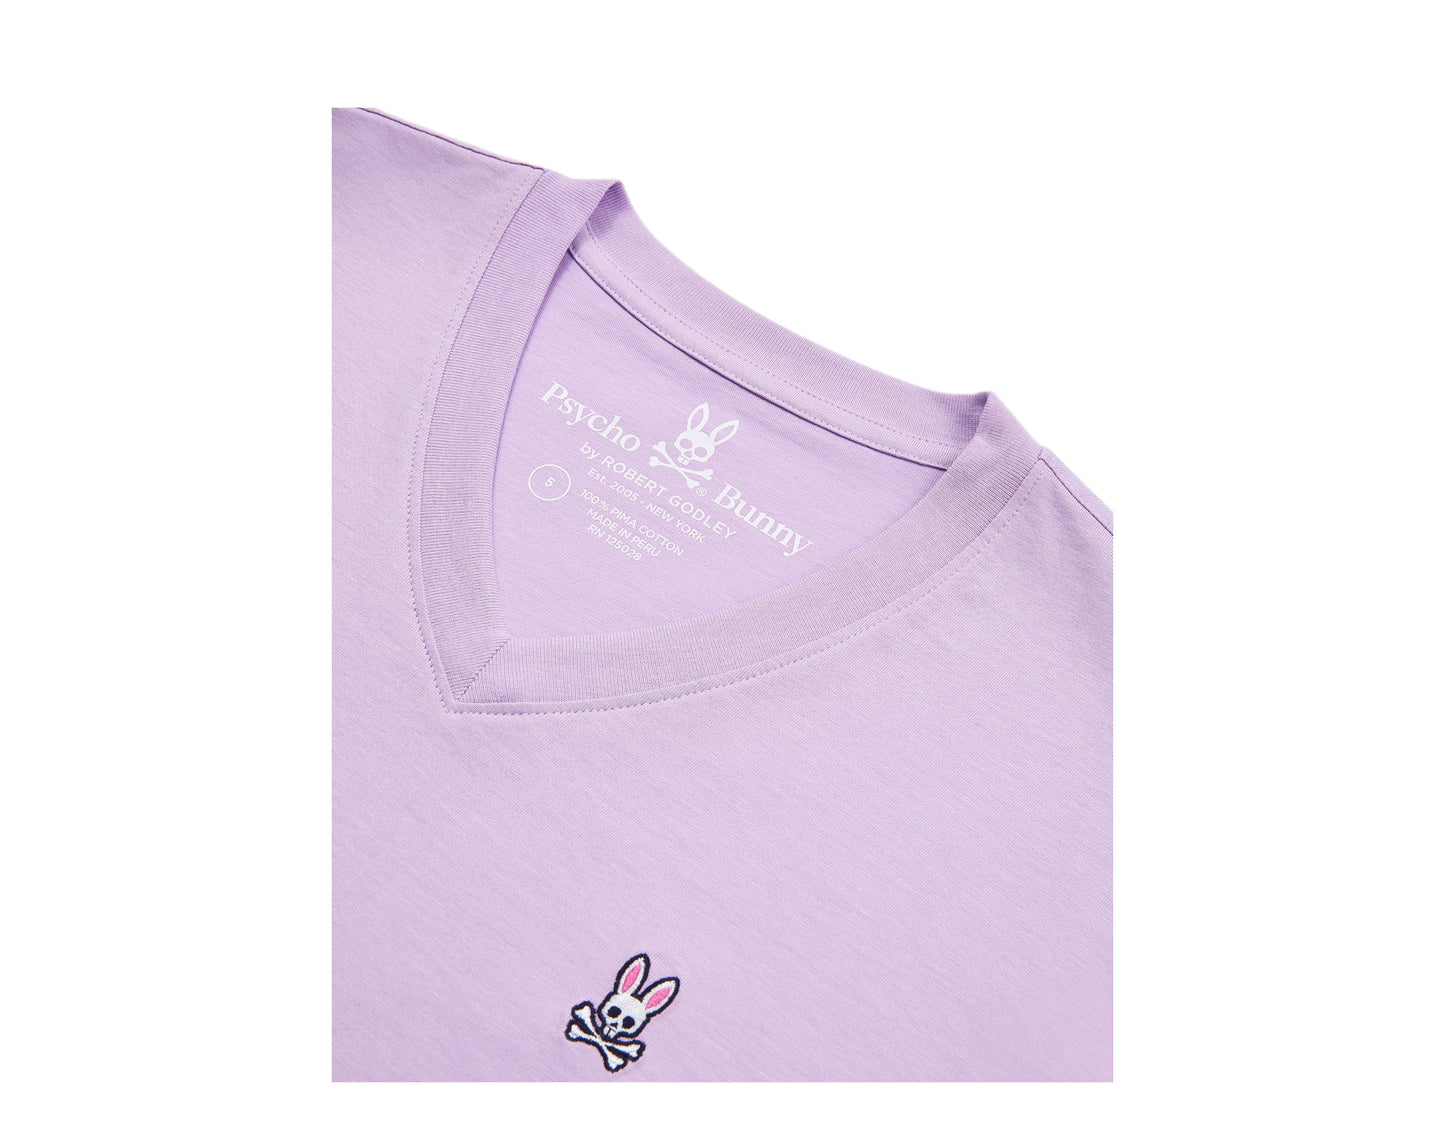 Psycho Bunny Classic V-Neck Aster Purple Men's Tee Shirt B6U100E1PC-ASE